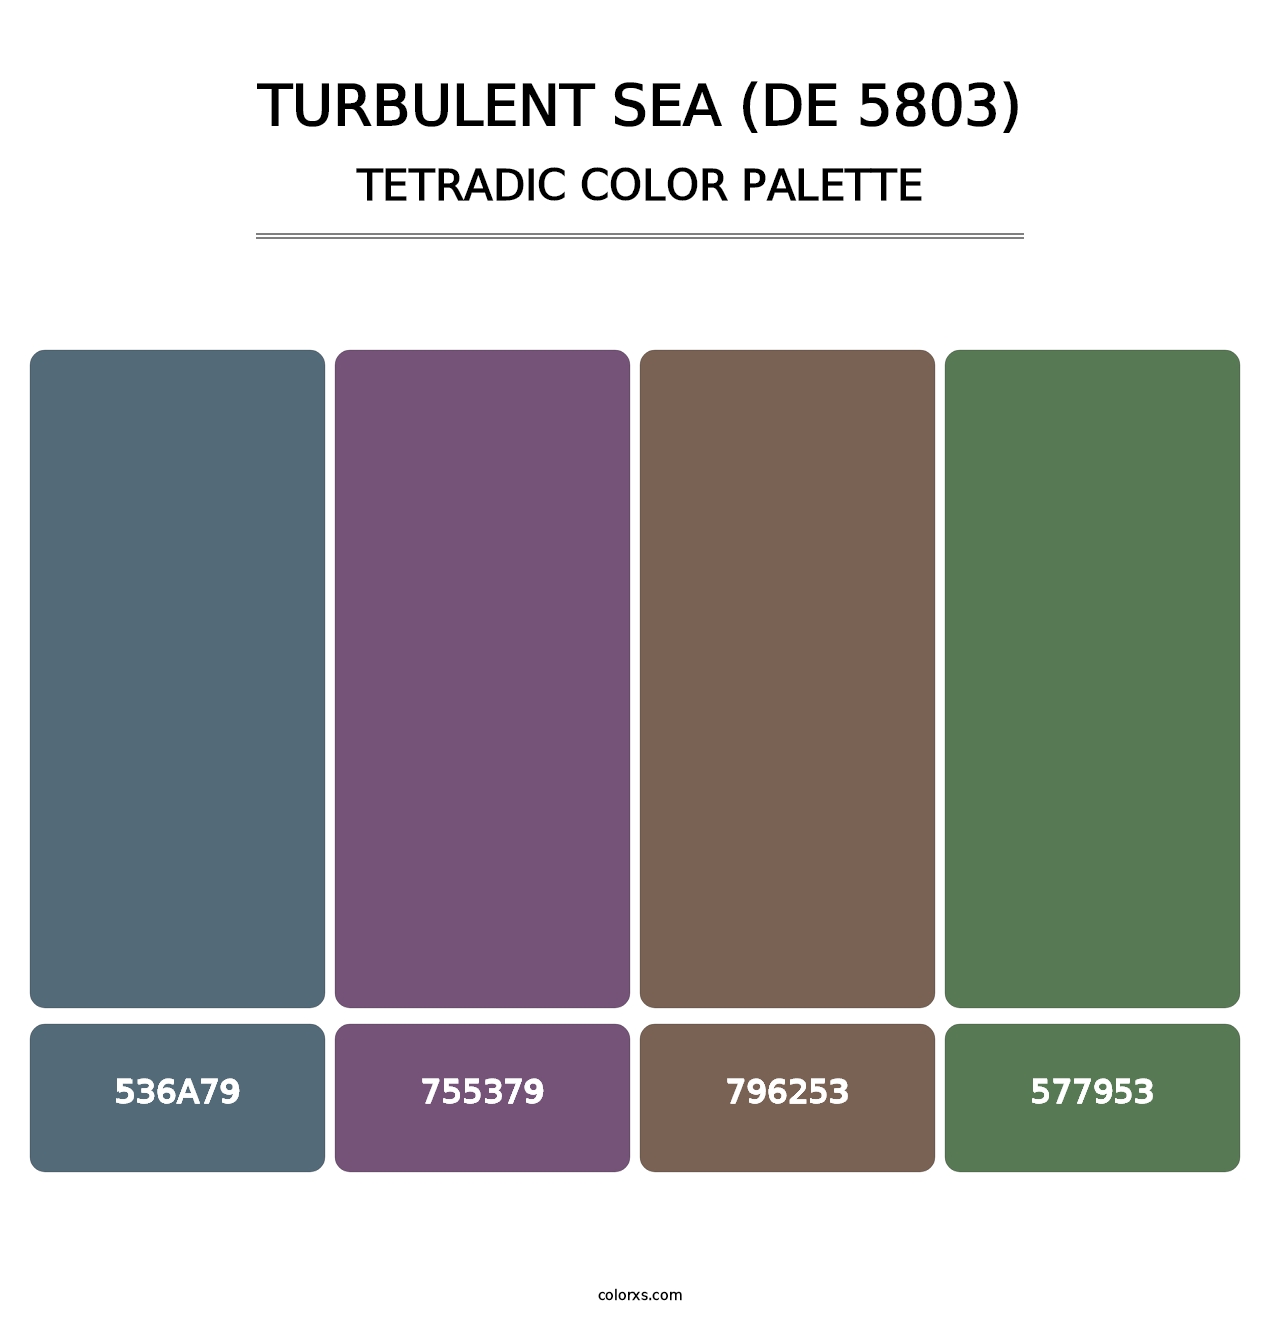 Turbulent Sea (DE 5803) - Tetradic Color Palette